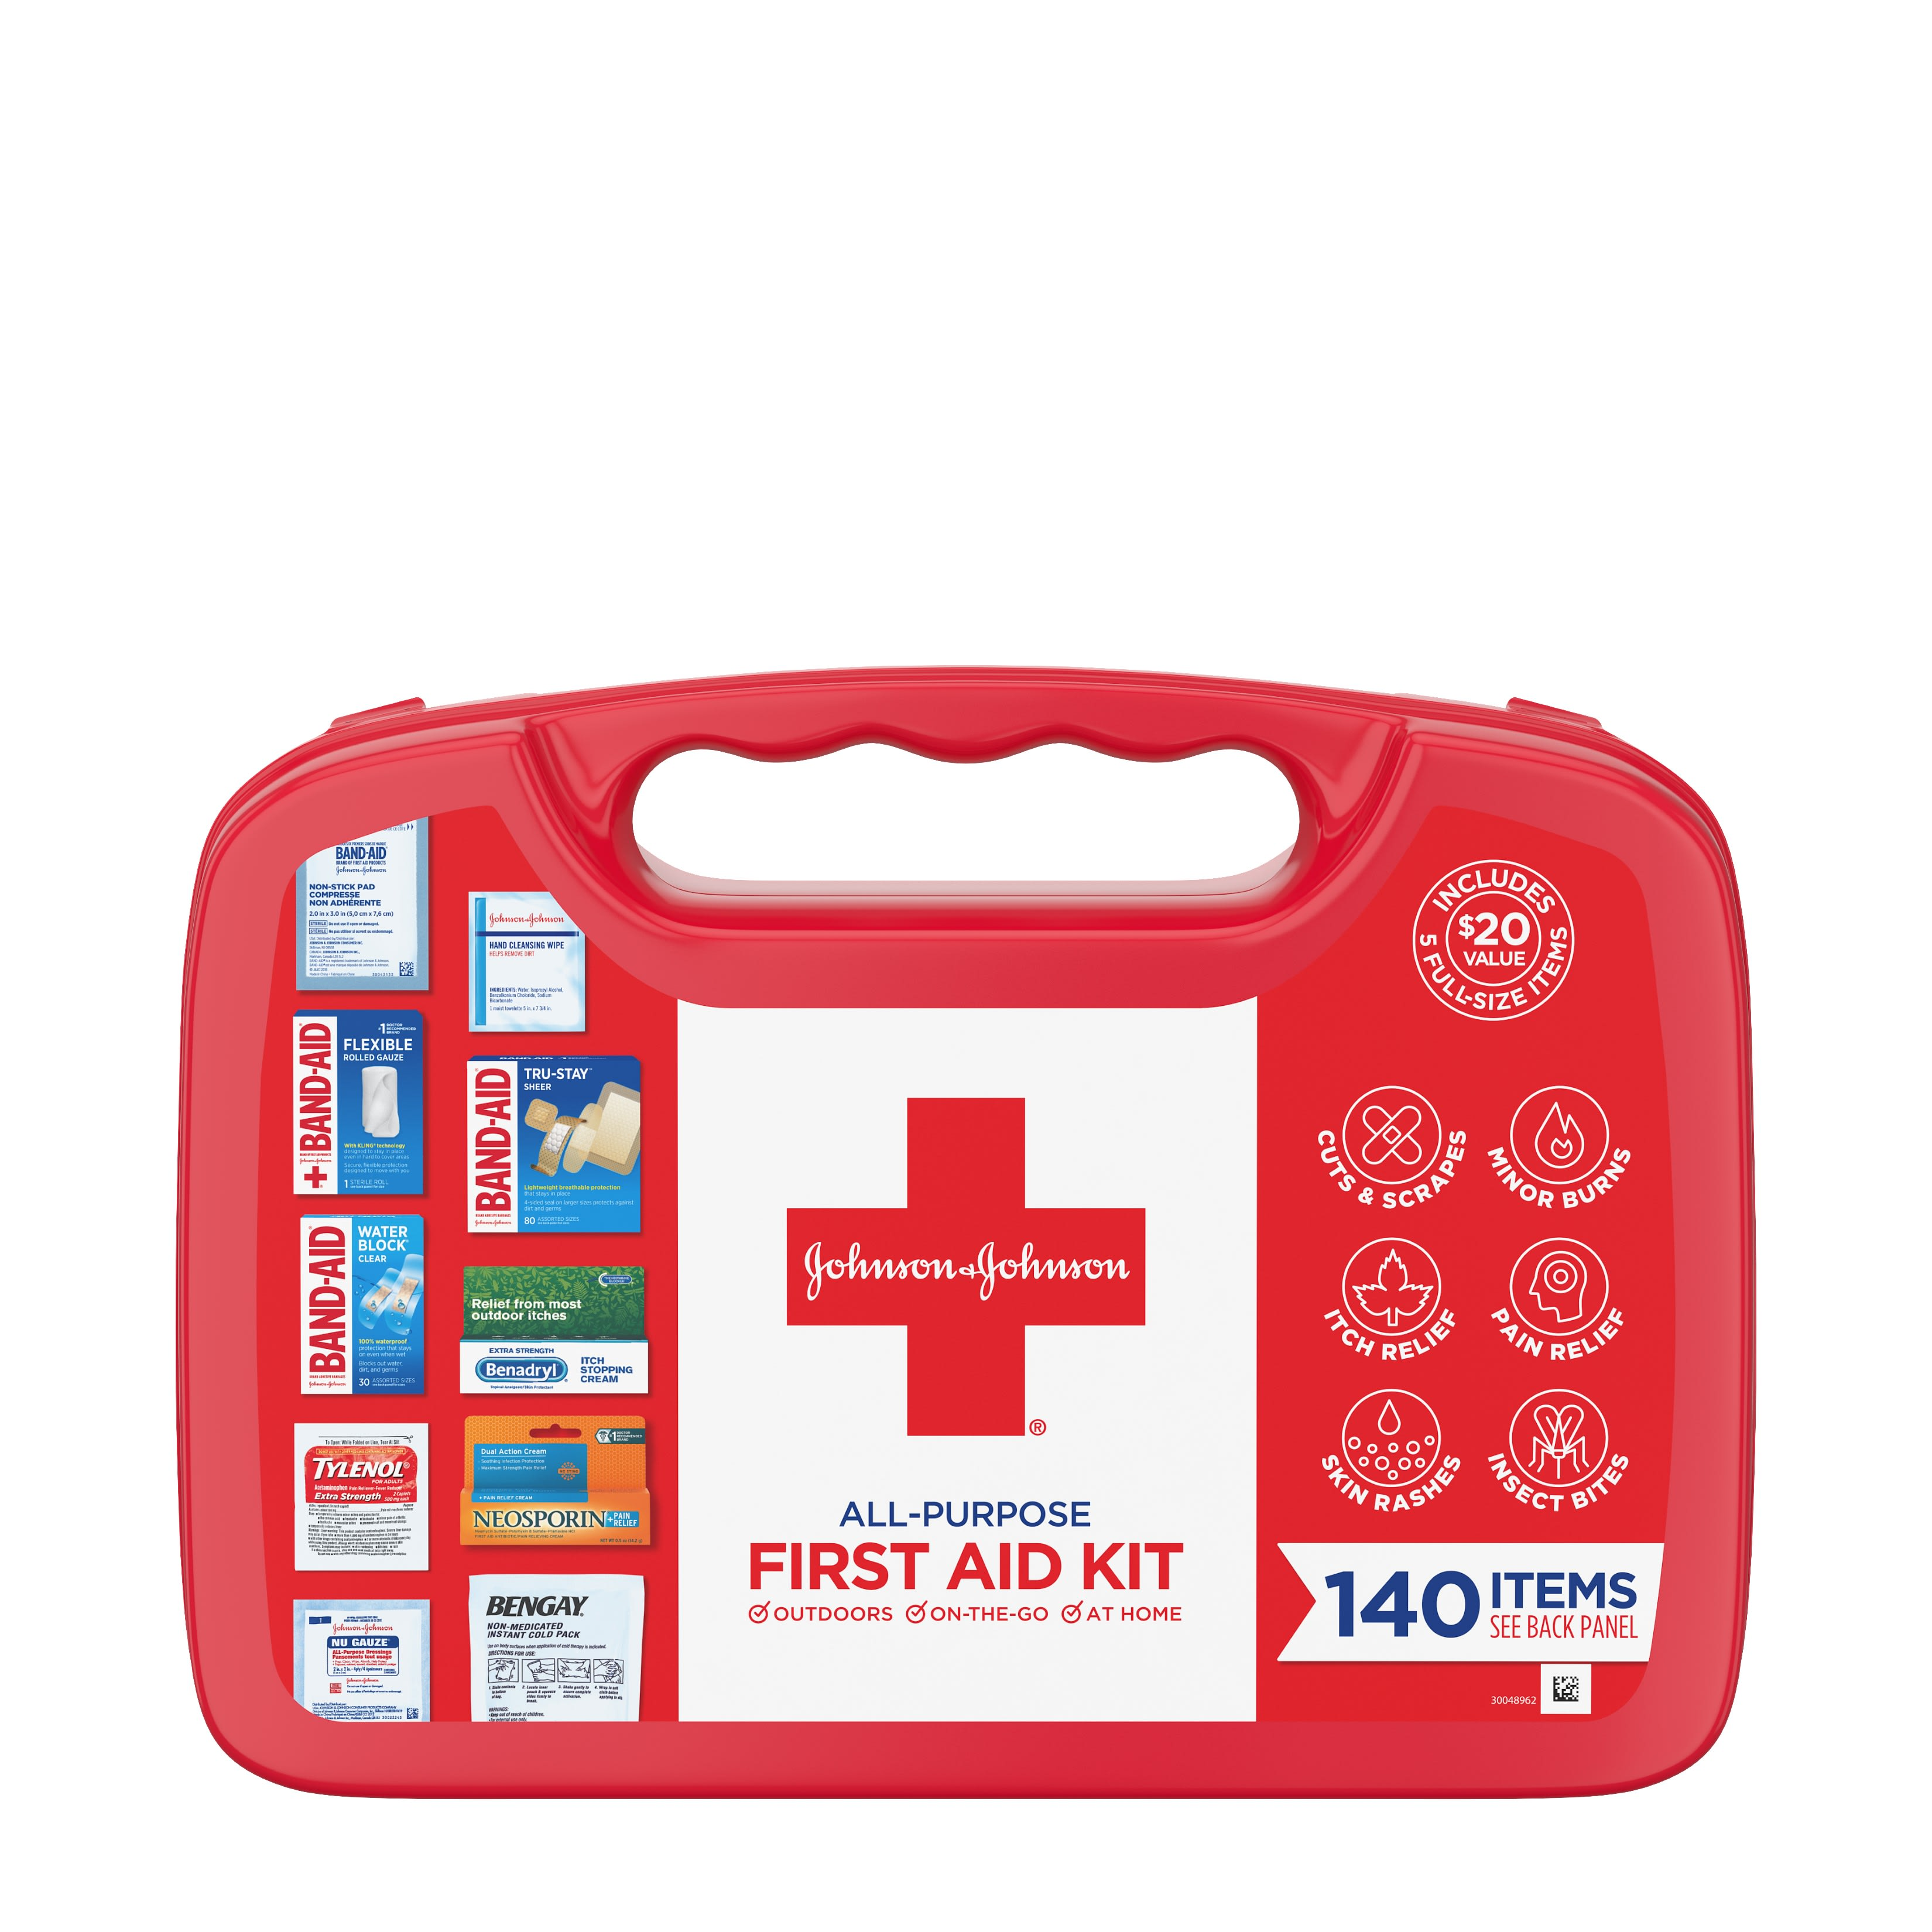 Johnson & Johnson All-Purpose Portable Compact First Aid Kit, 140 pc - Walmart.com $10.02